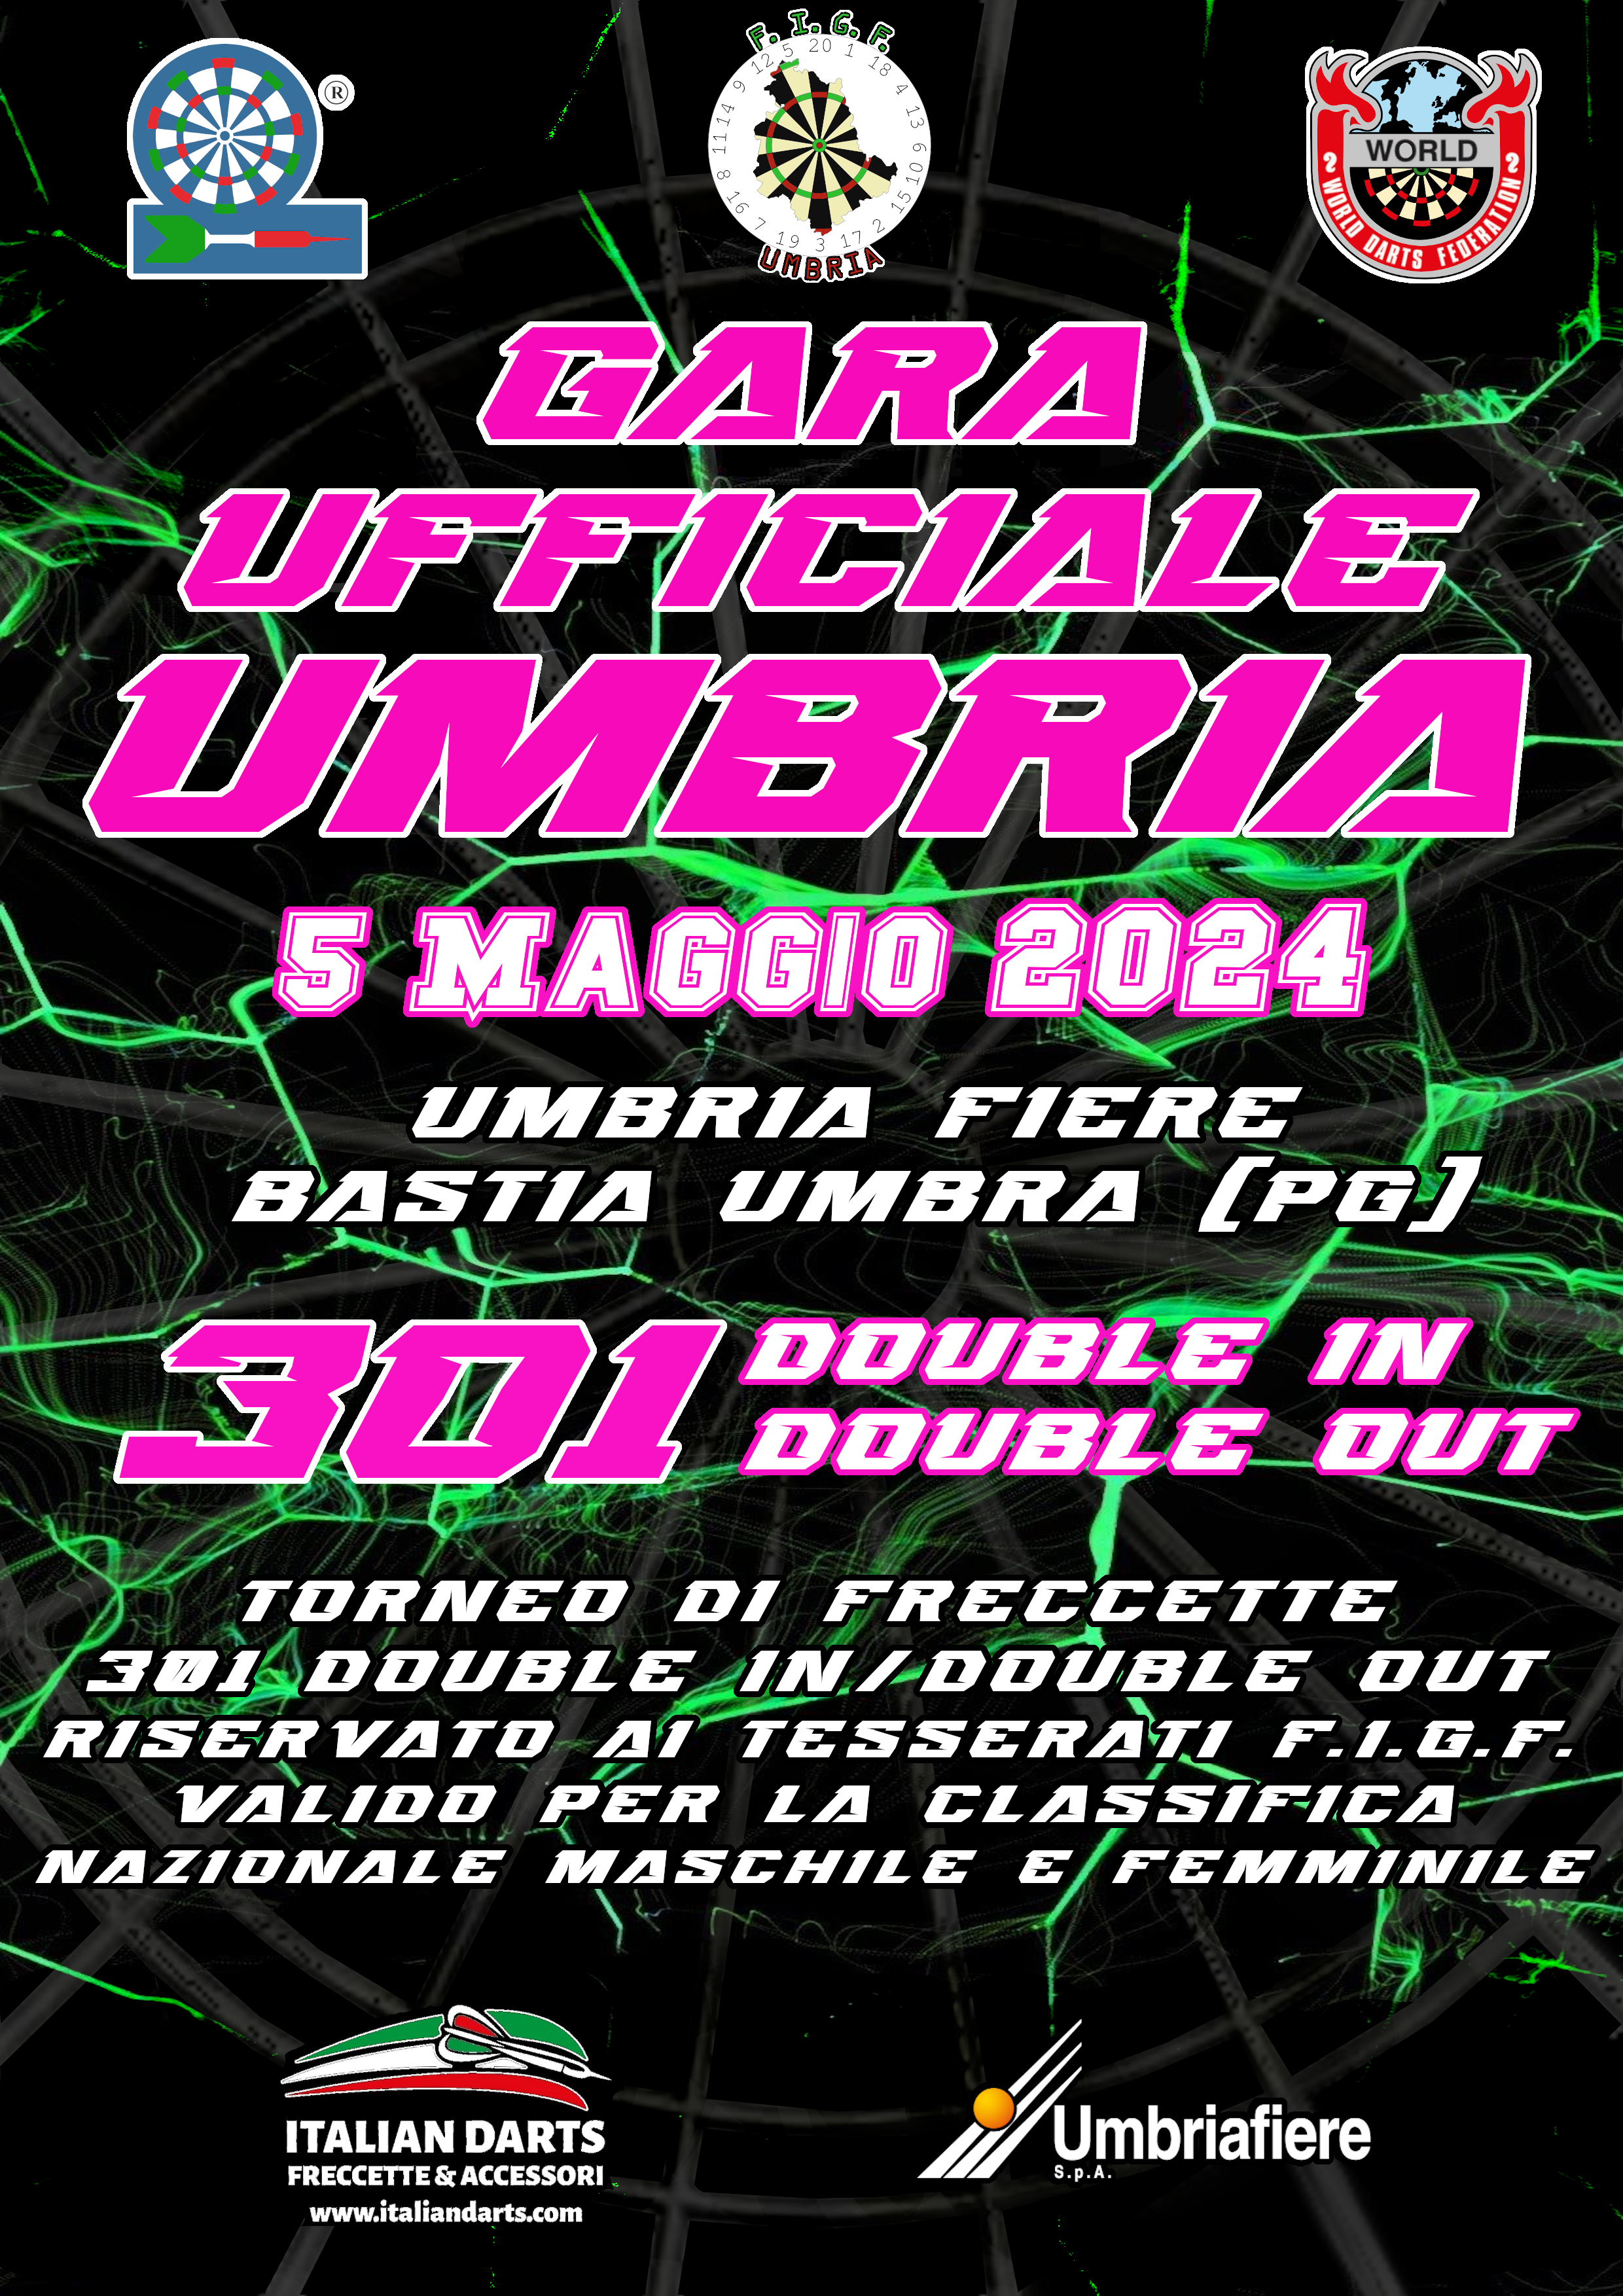 GU Umbria - Locandina 1 - No Patrocinio